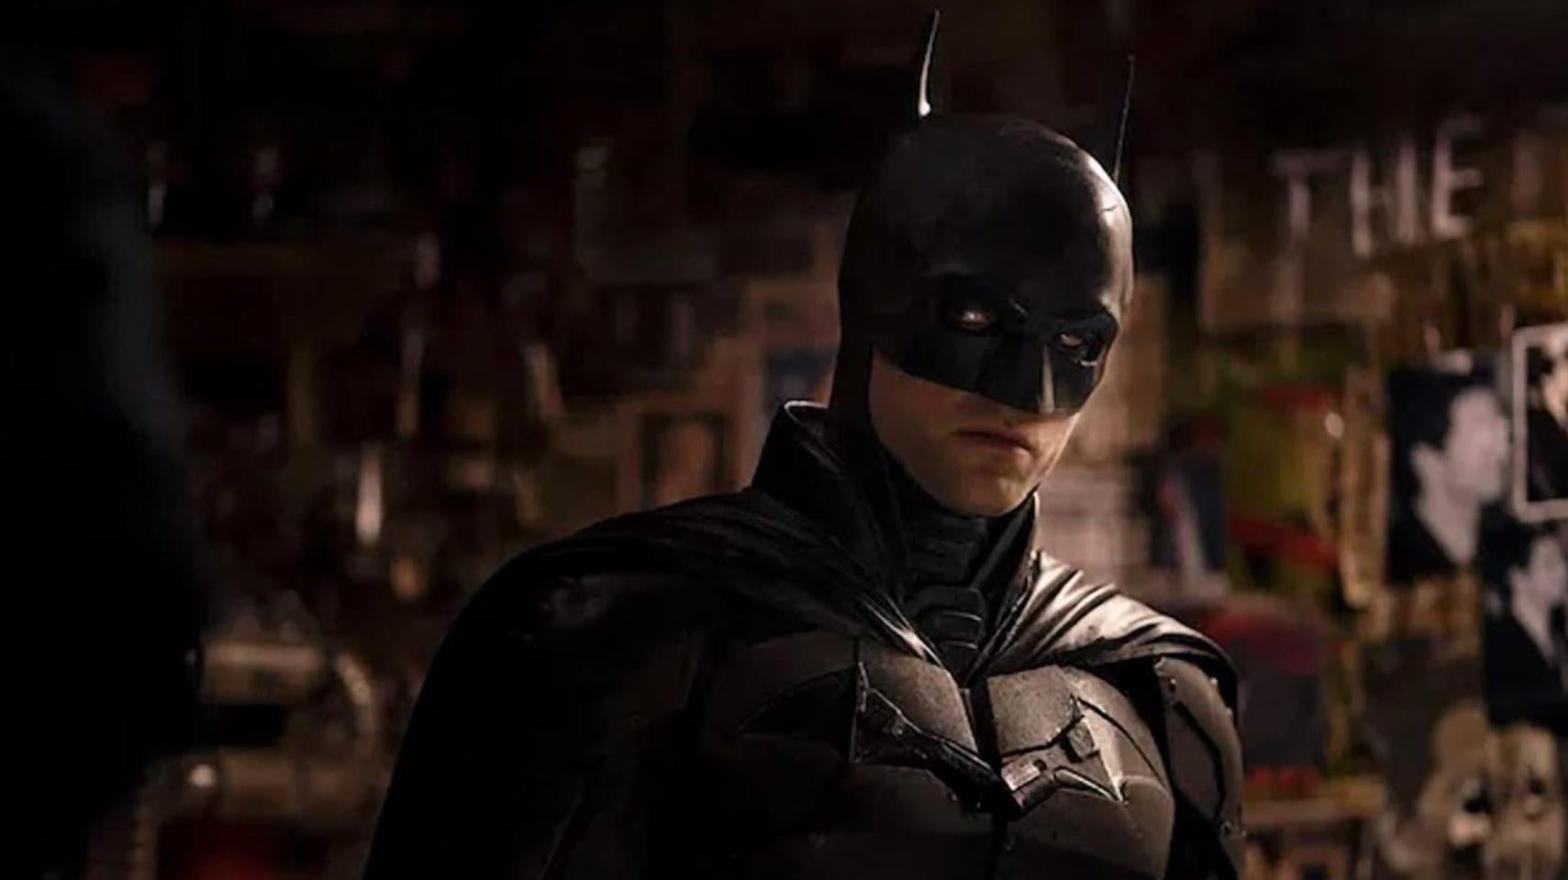 Don't give us that side-eye, Bats. (Image: Warner Bros.)